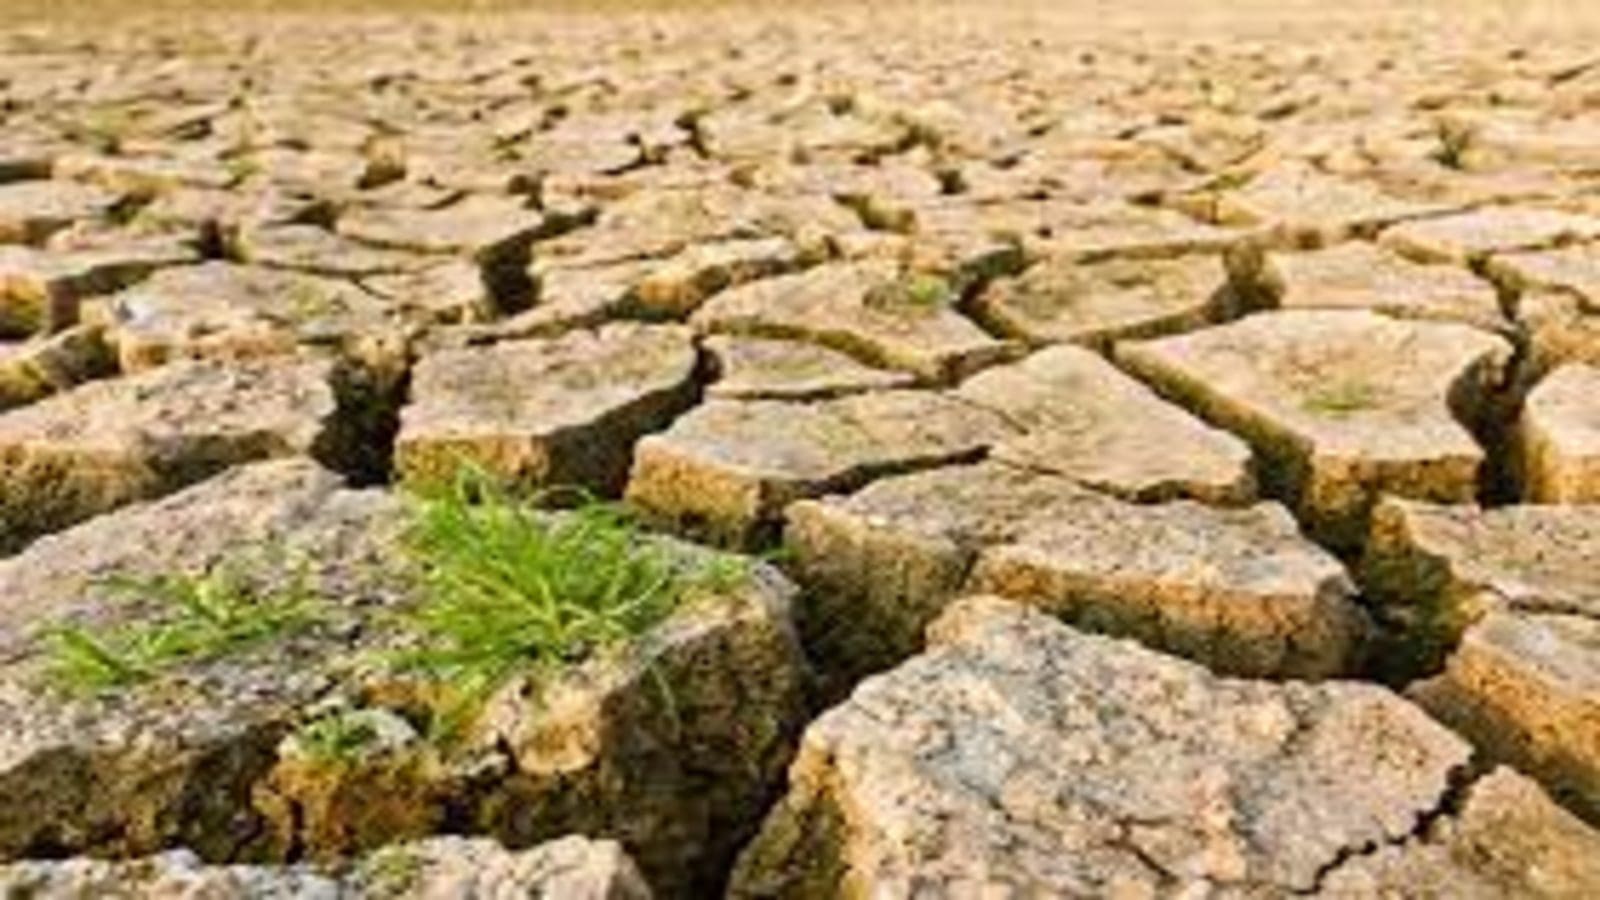 Tunisia’s grain production in jeopardy following severe drought